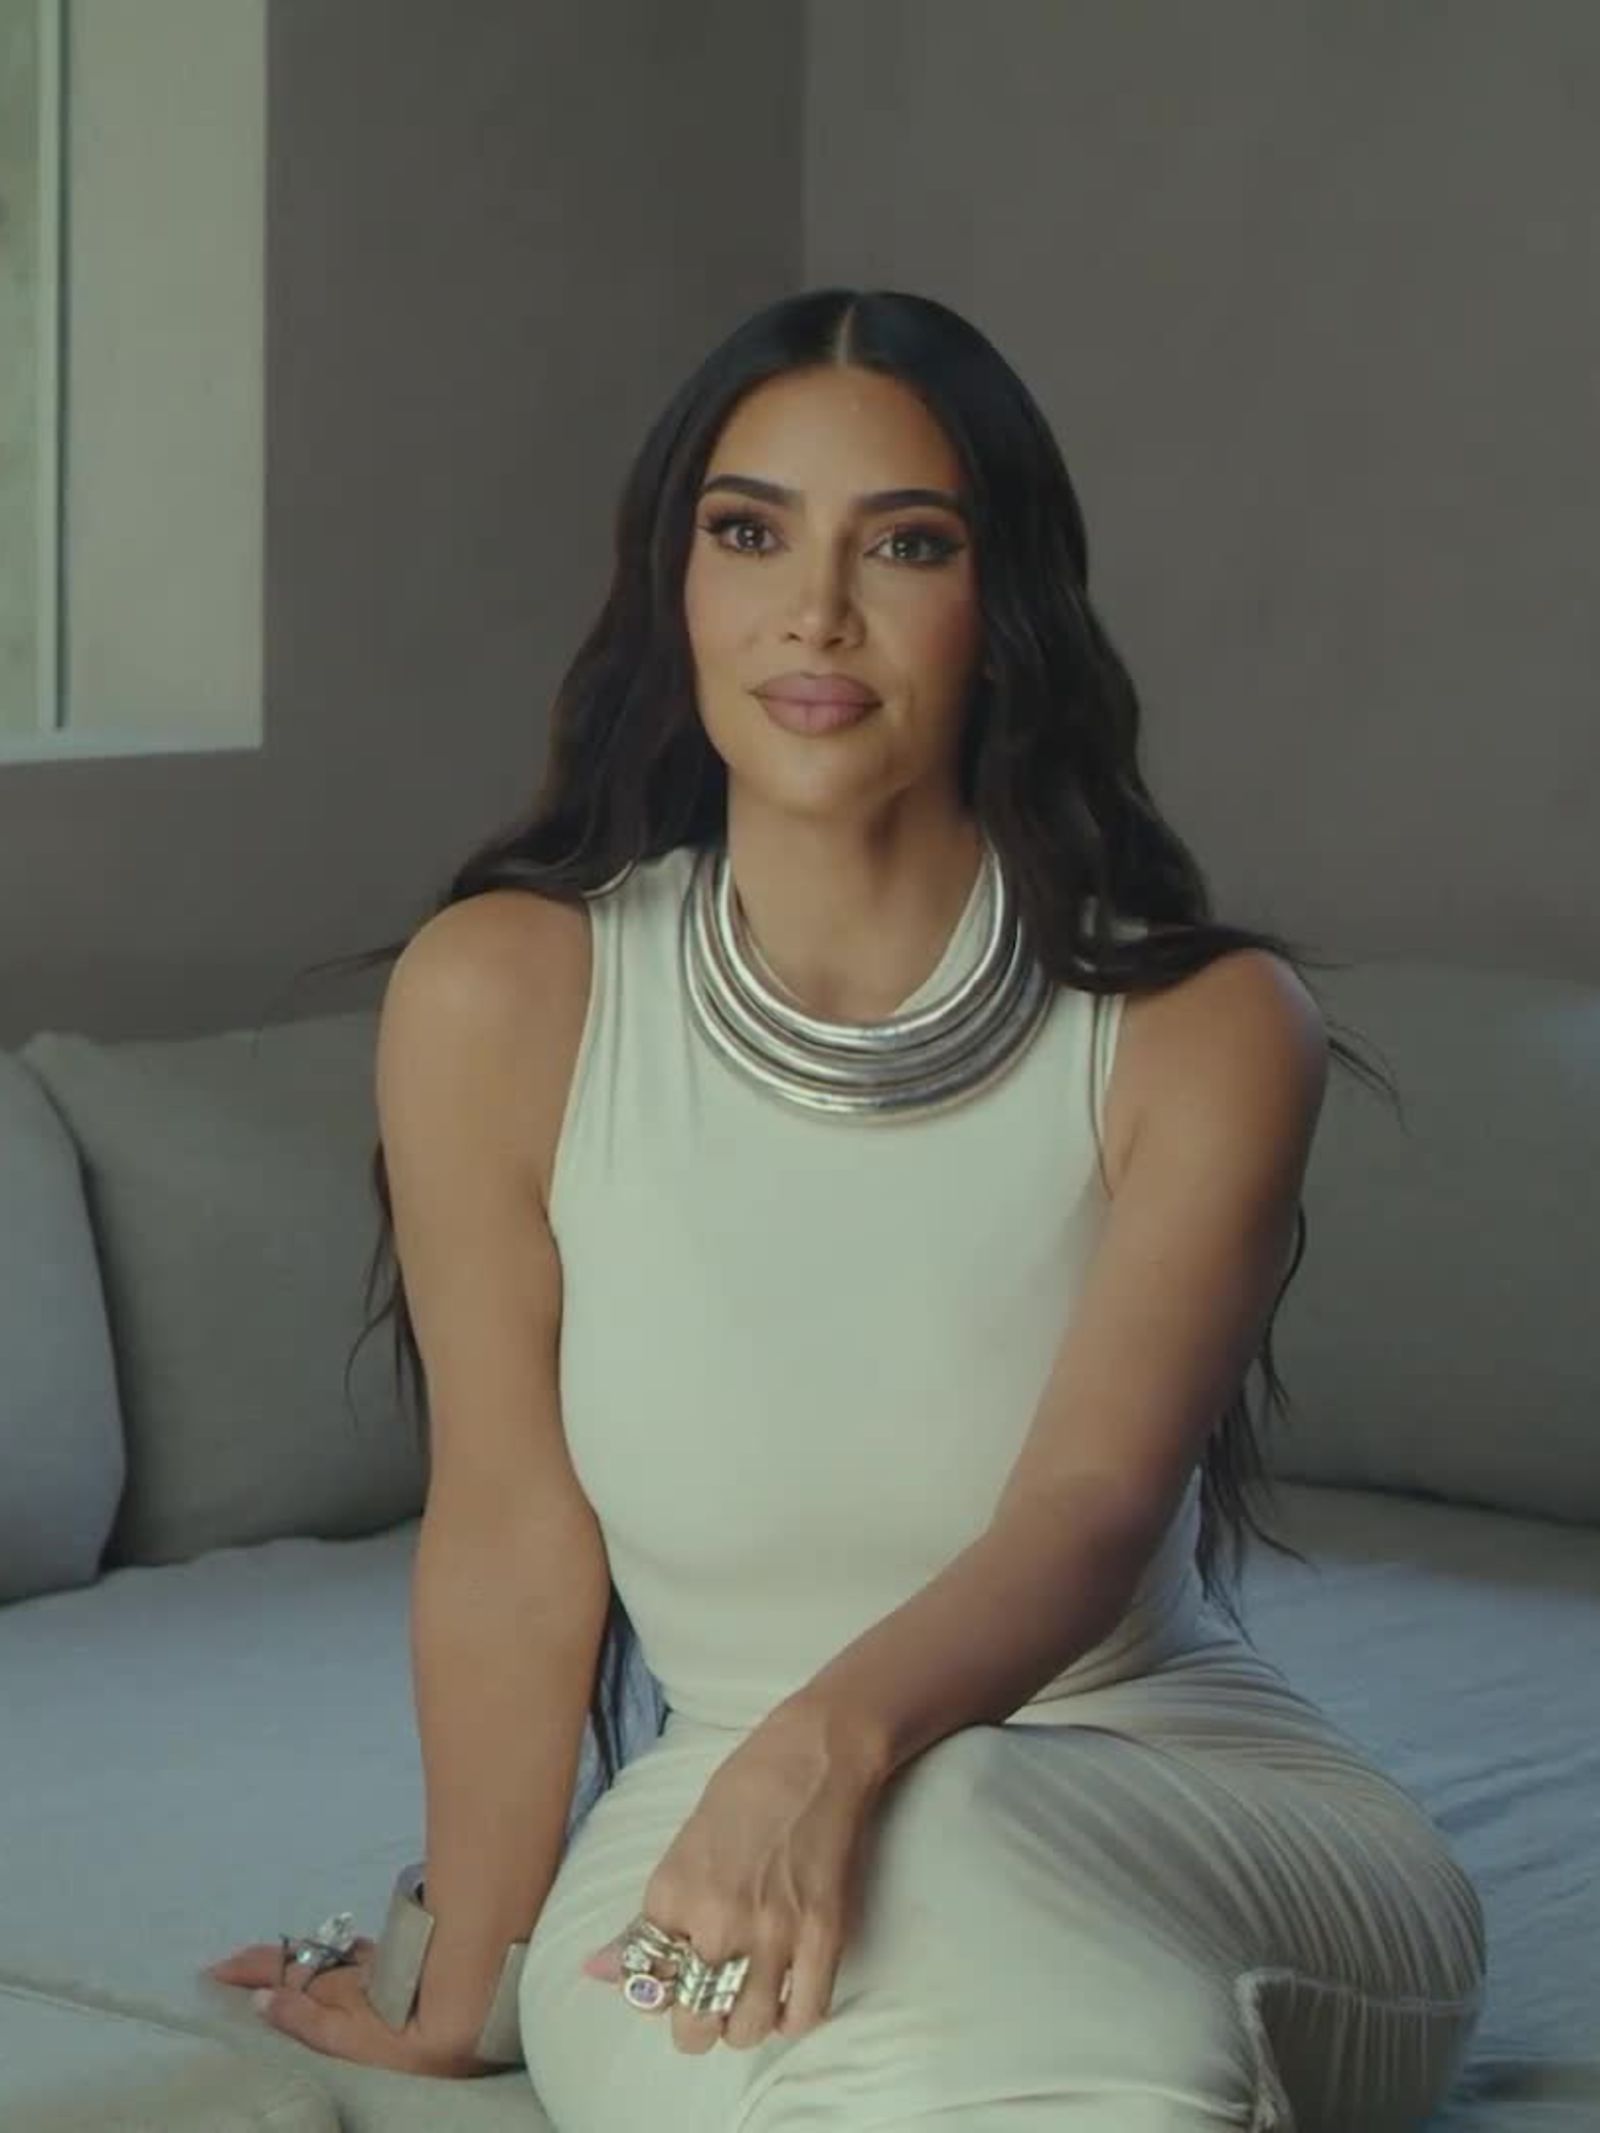 Kim Kardashian Reflects on 20 Seasons of Keeping Up With the Kardashians, on Today’s Good Morning Vogue